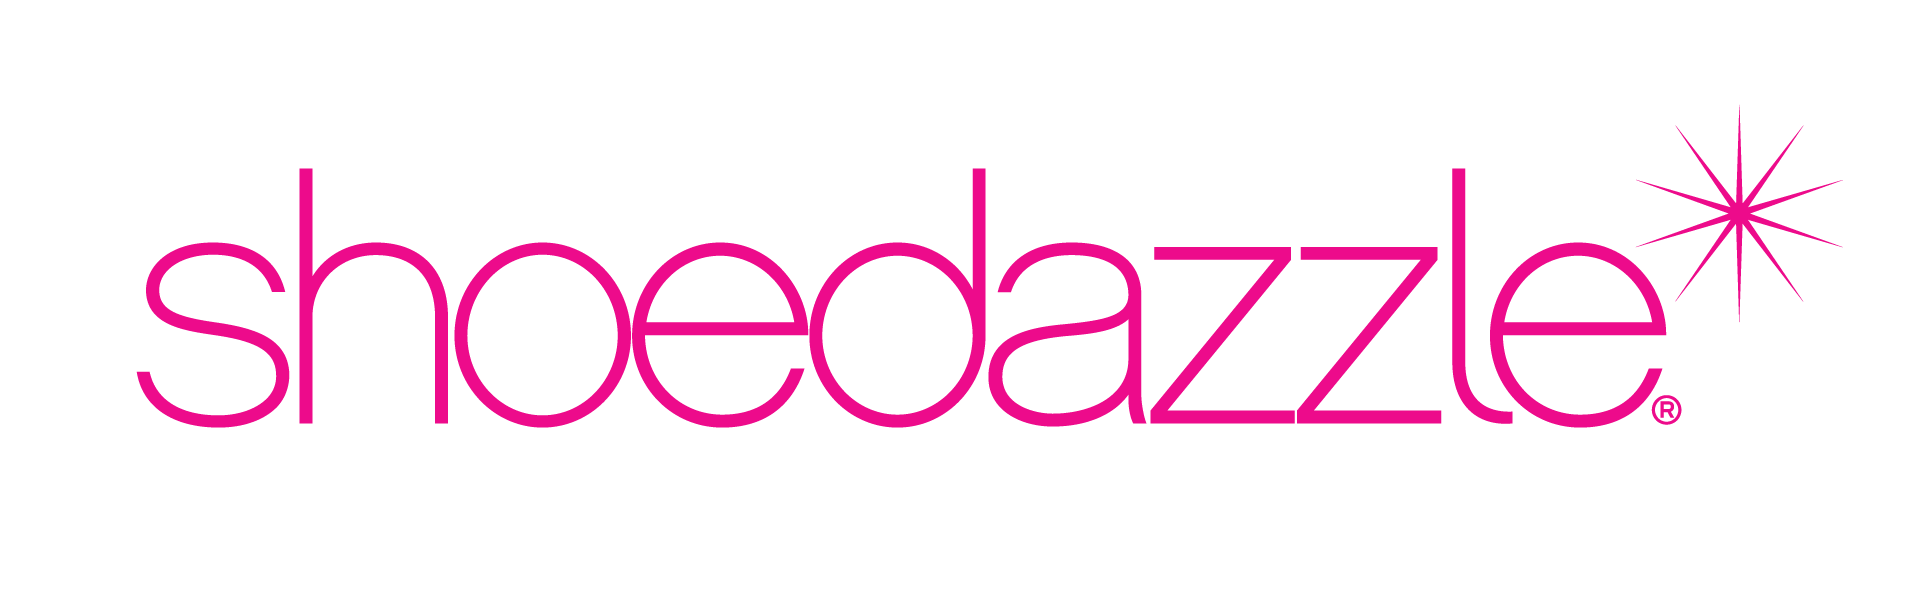 ShoeDazzle coupons logo